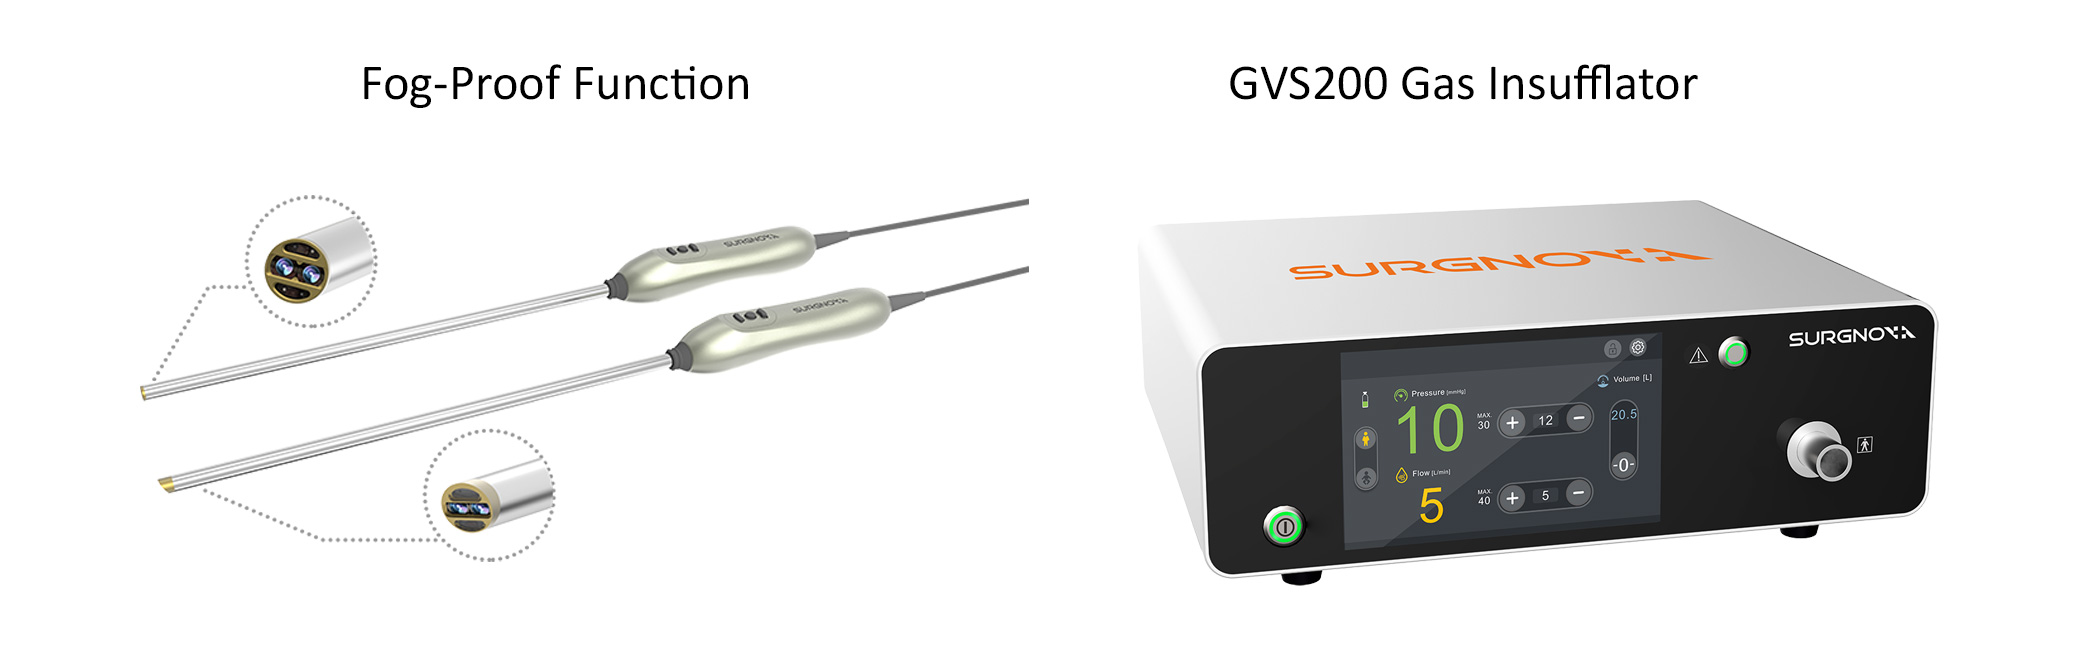 Fog-Proof-Function-&-GVS200-Gas-Insufflator_3D